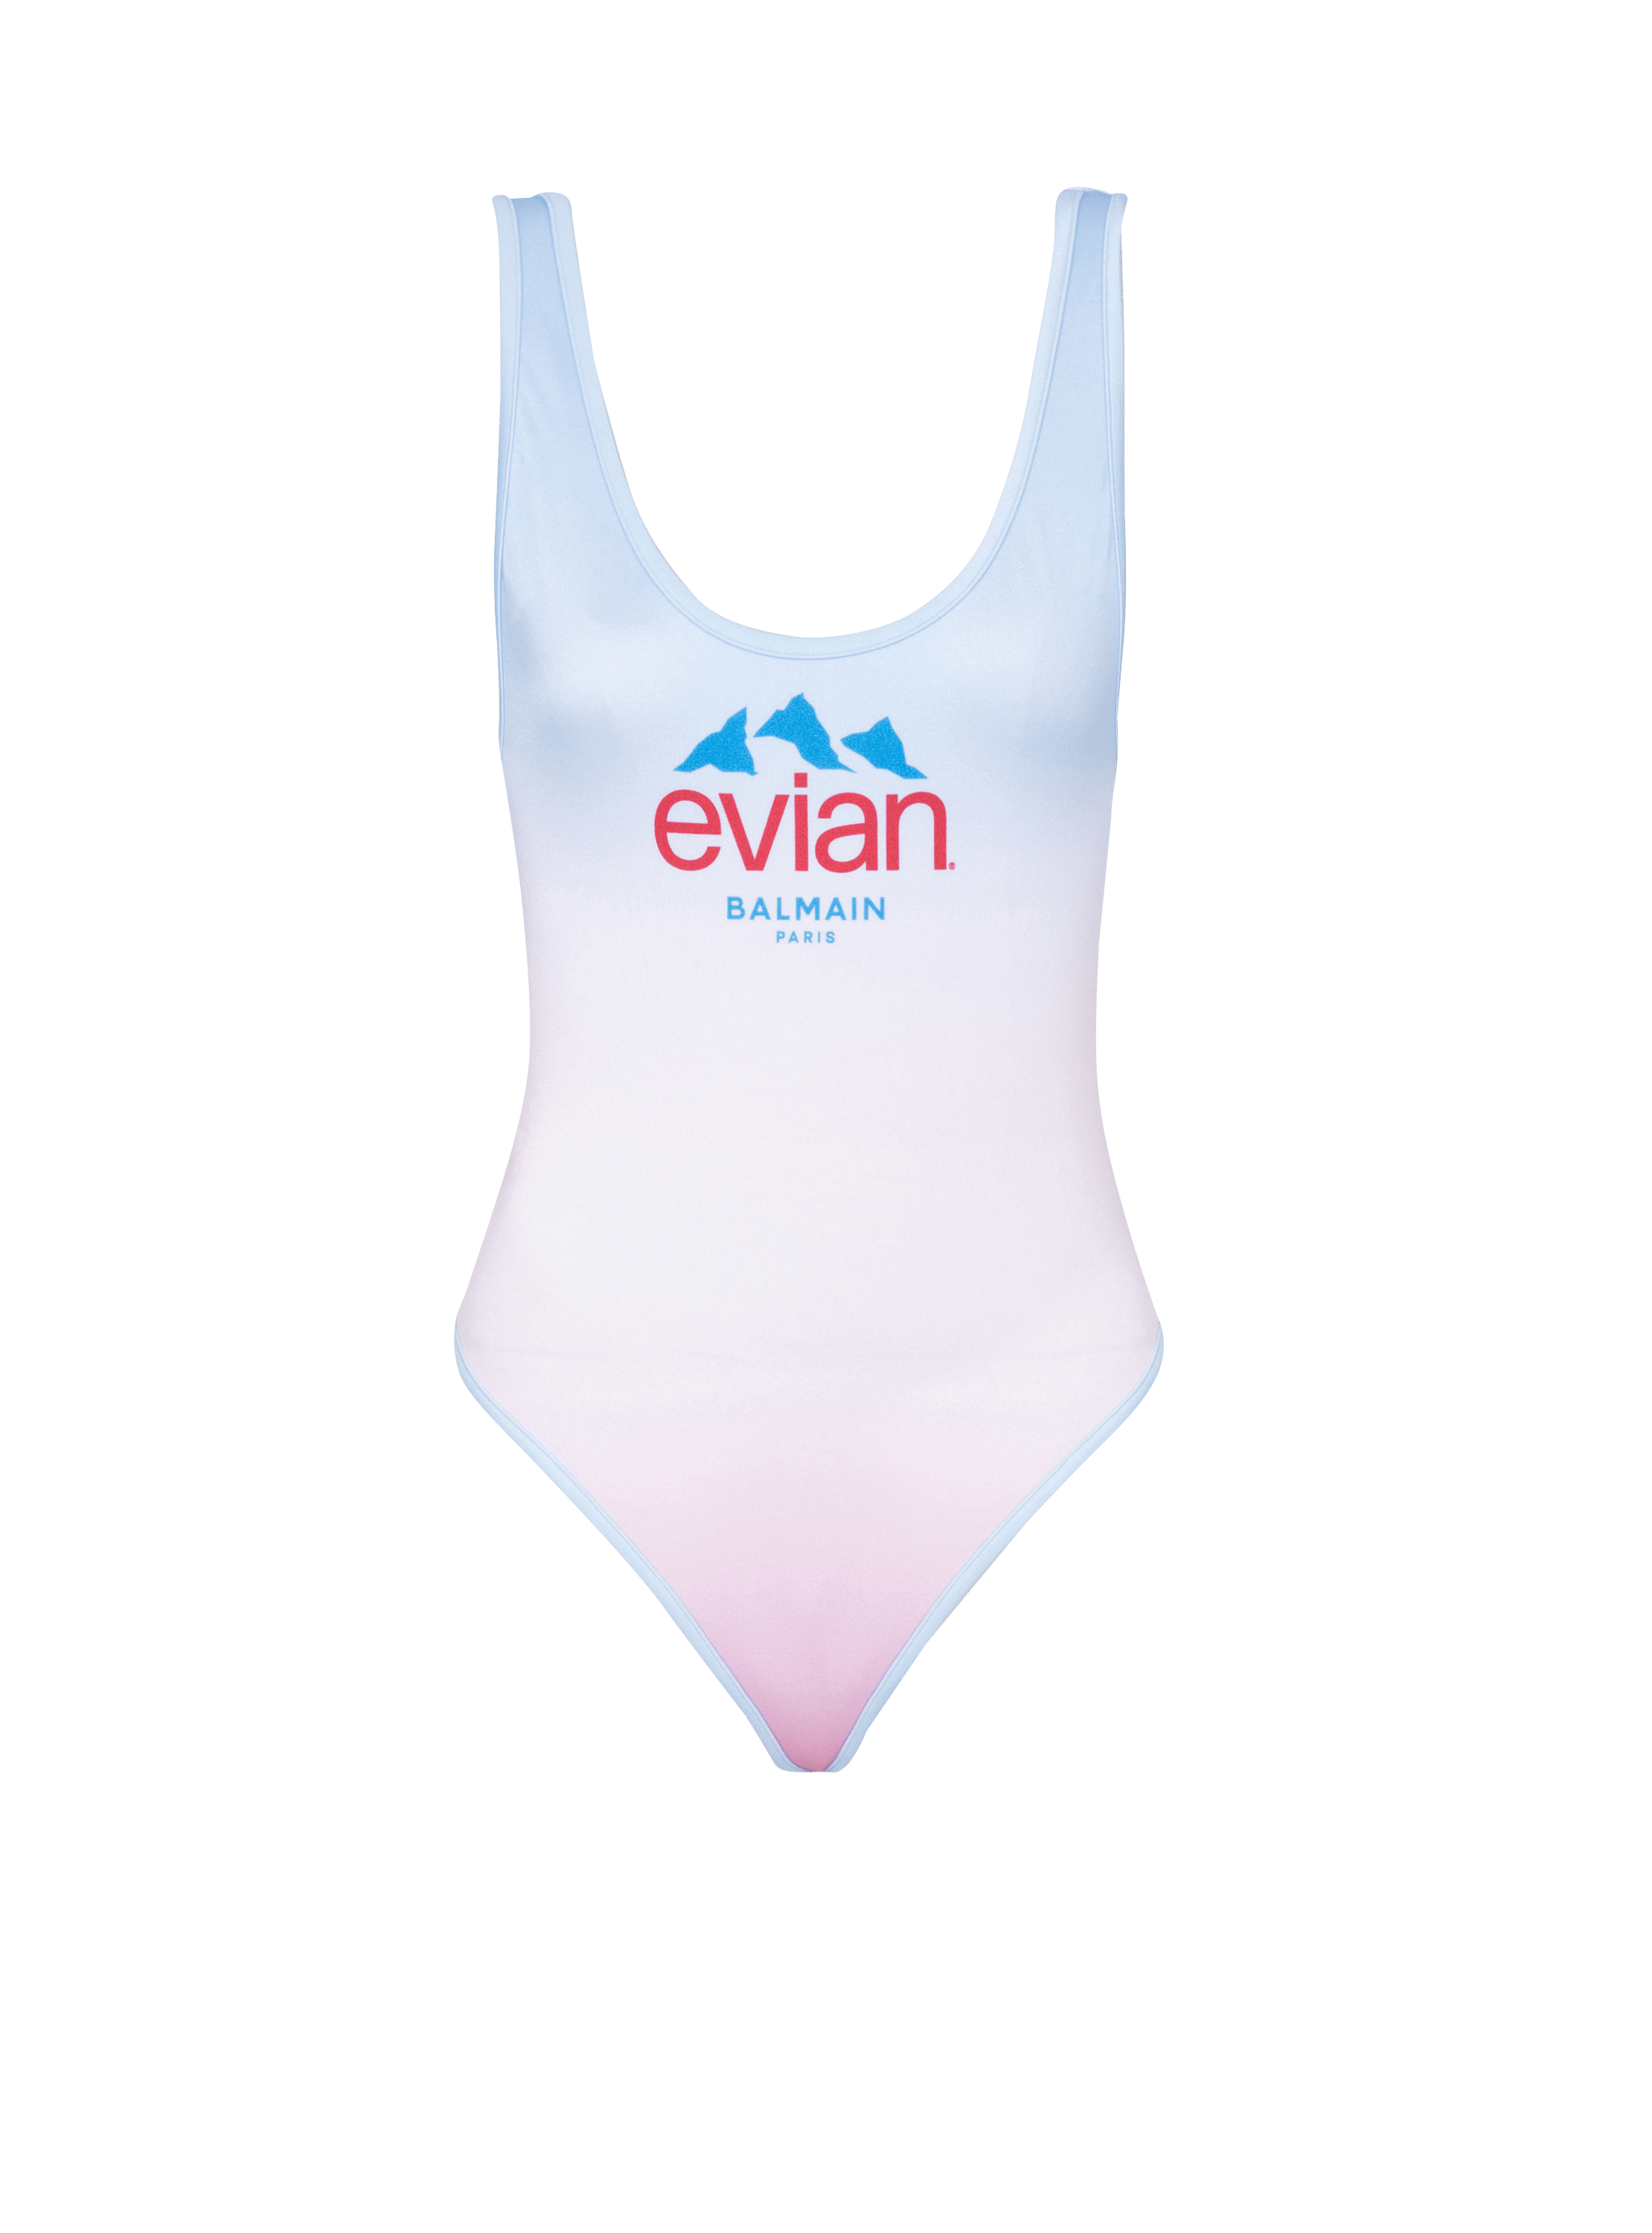 Balmain x Evian - スイムウェア, 色とりどり, hi-res